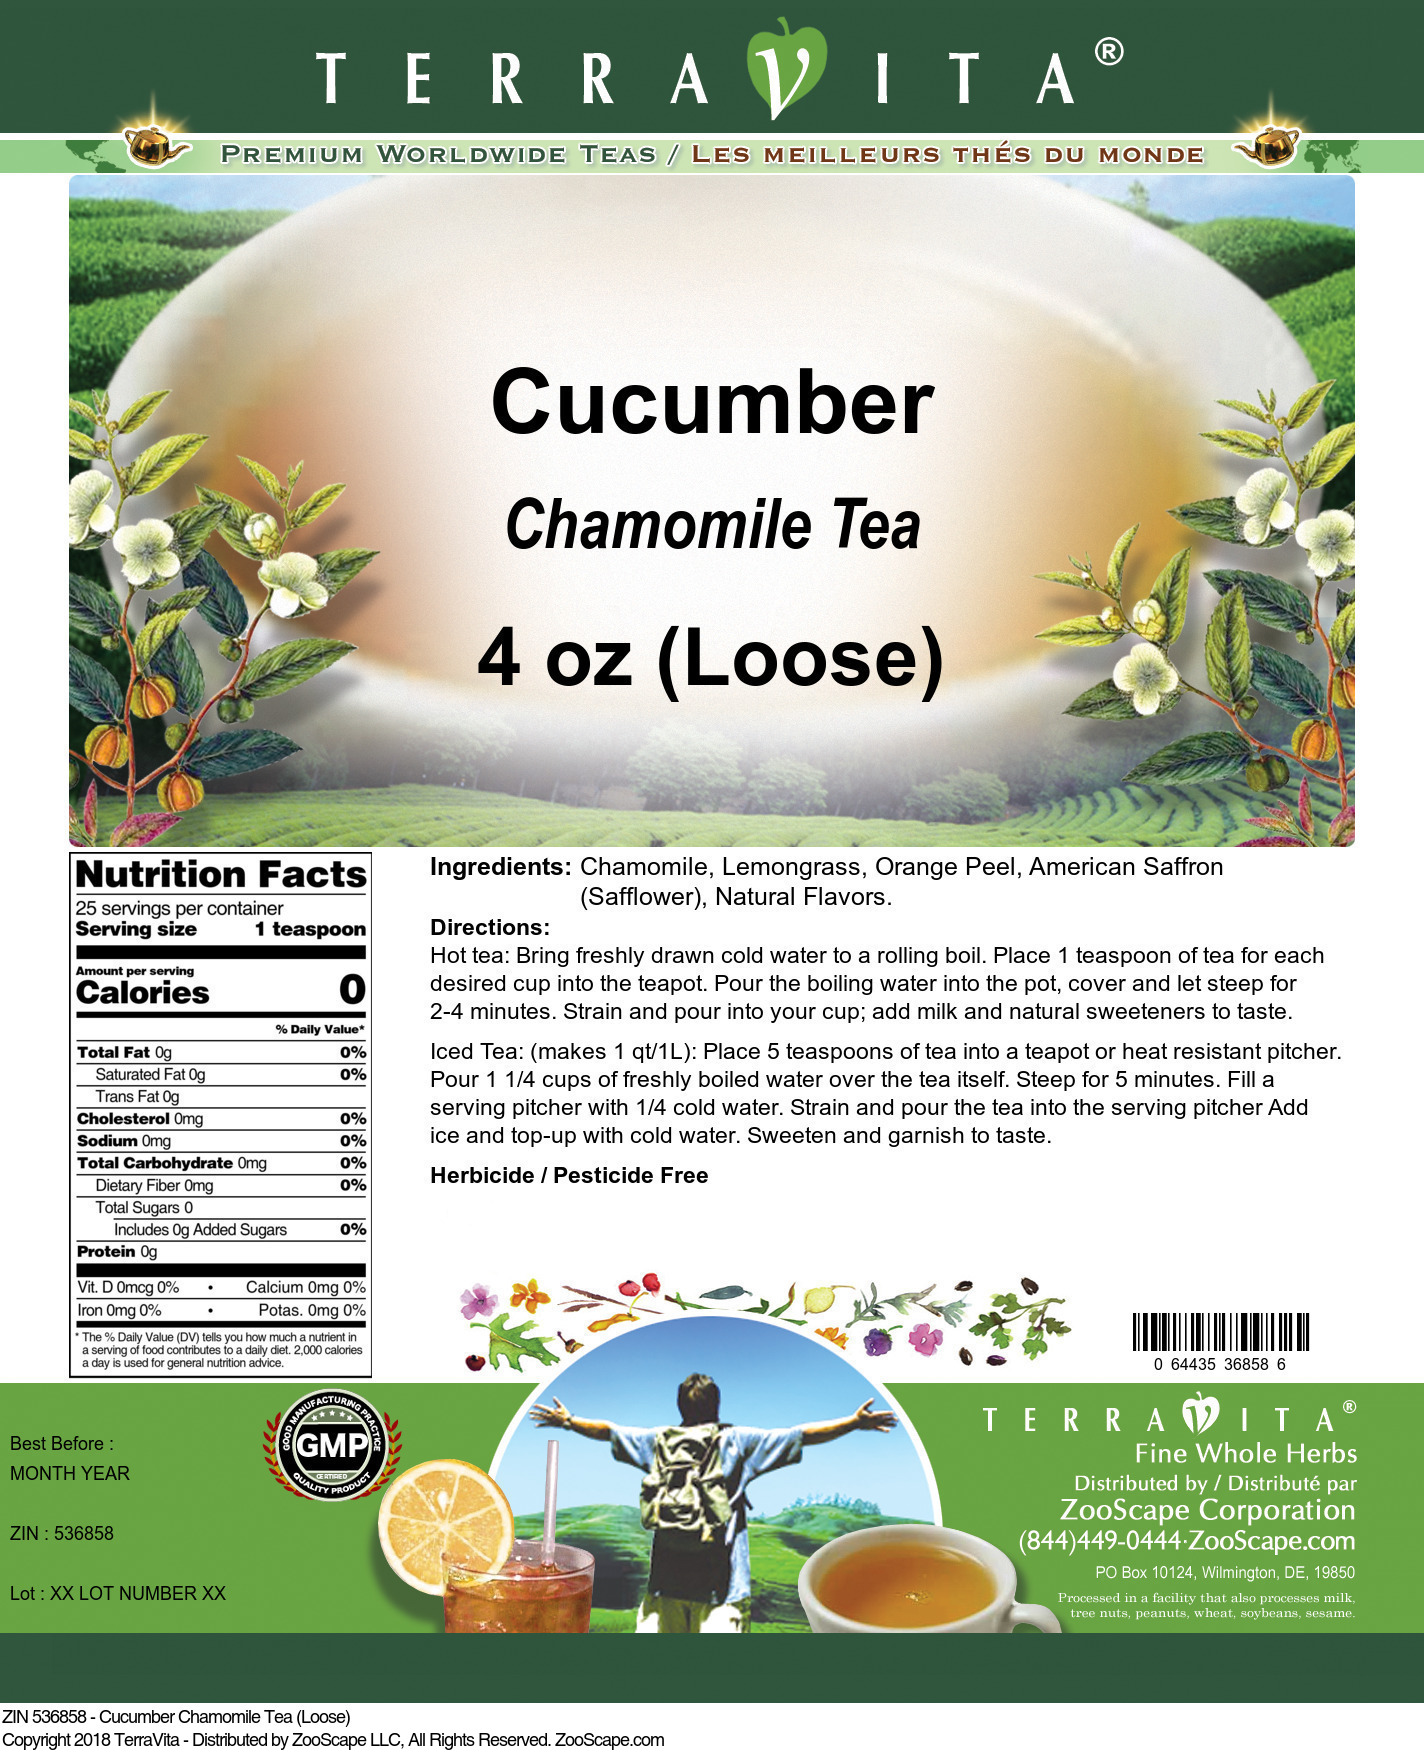 Cucumber Chamomile Tea (Loose) - Label